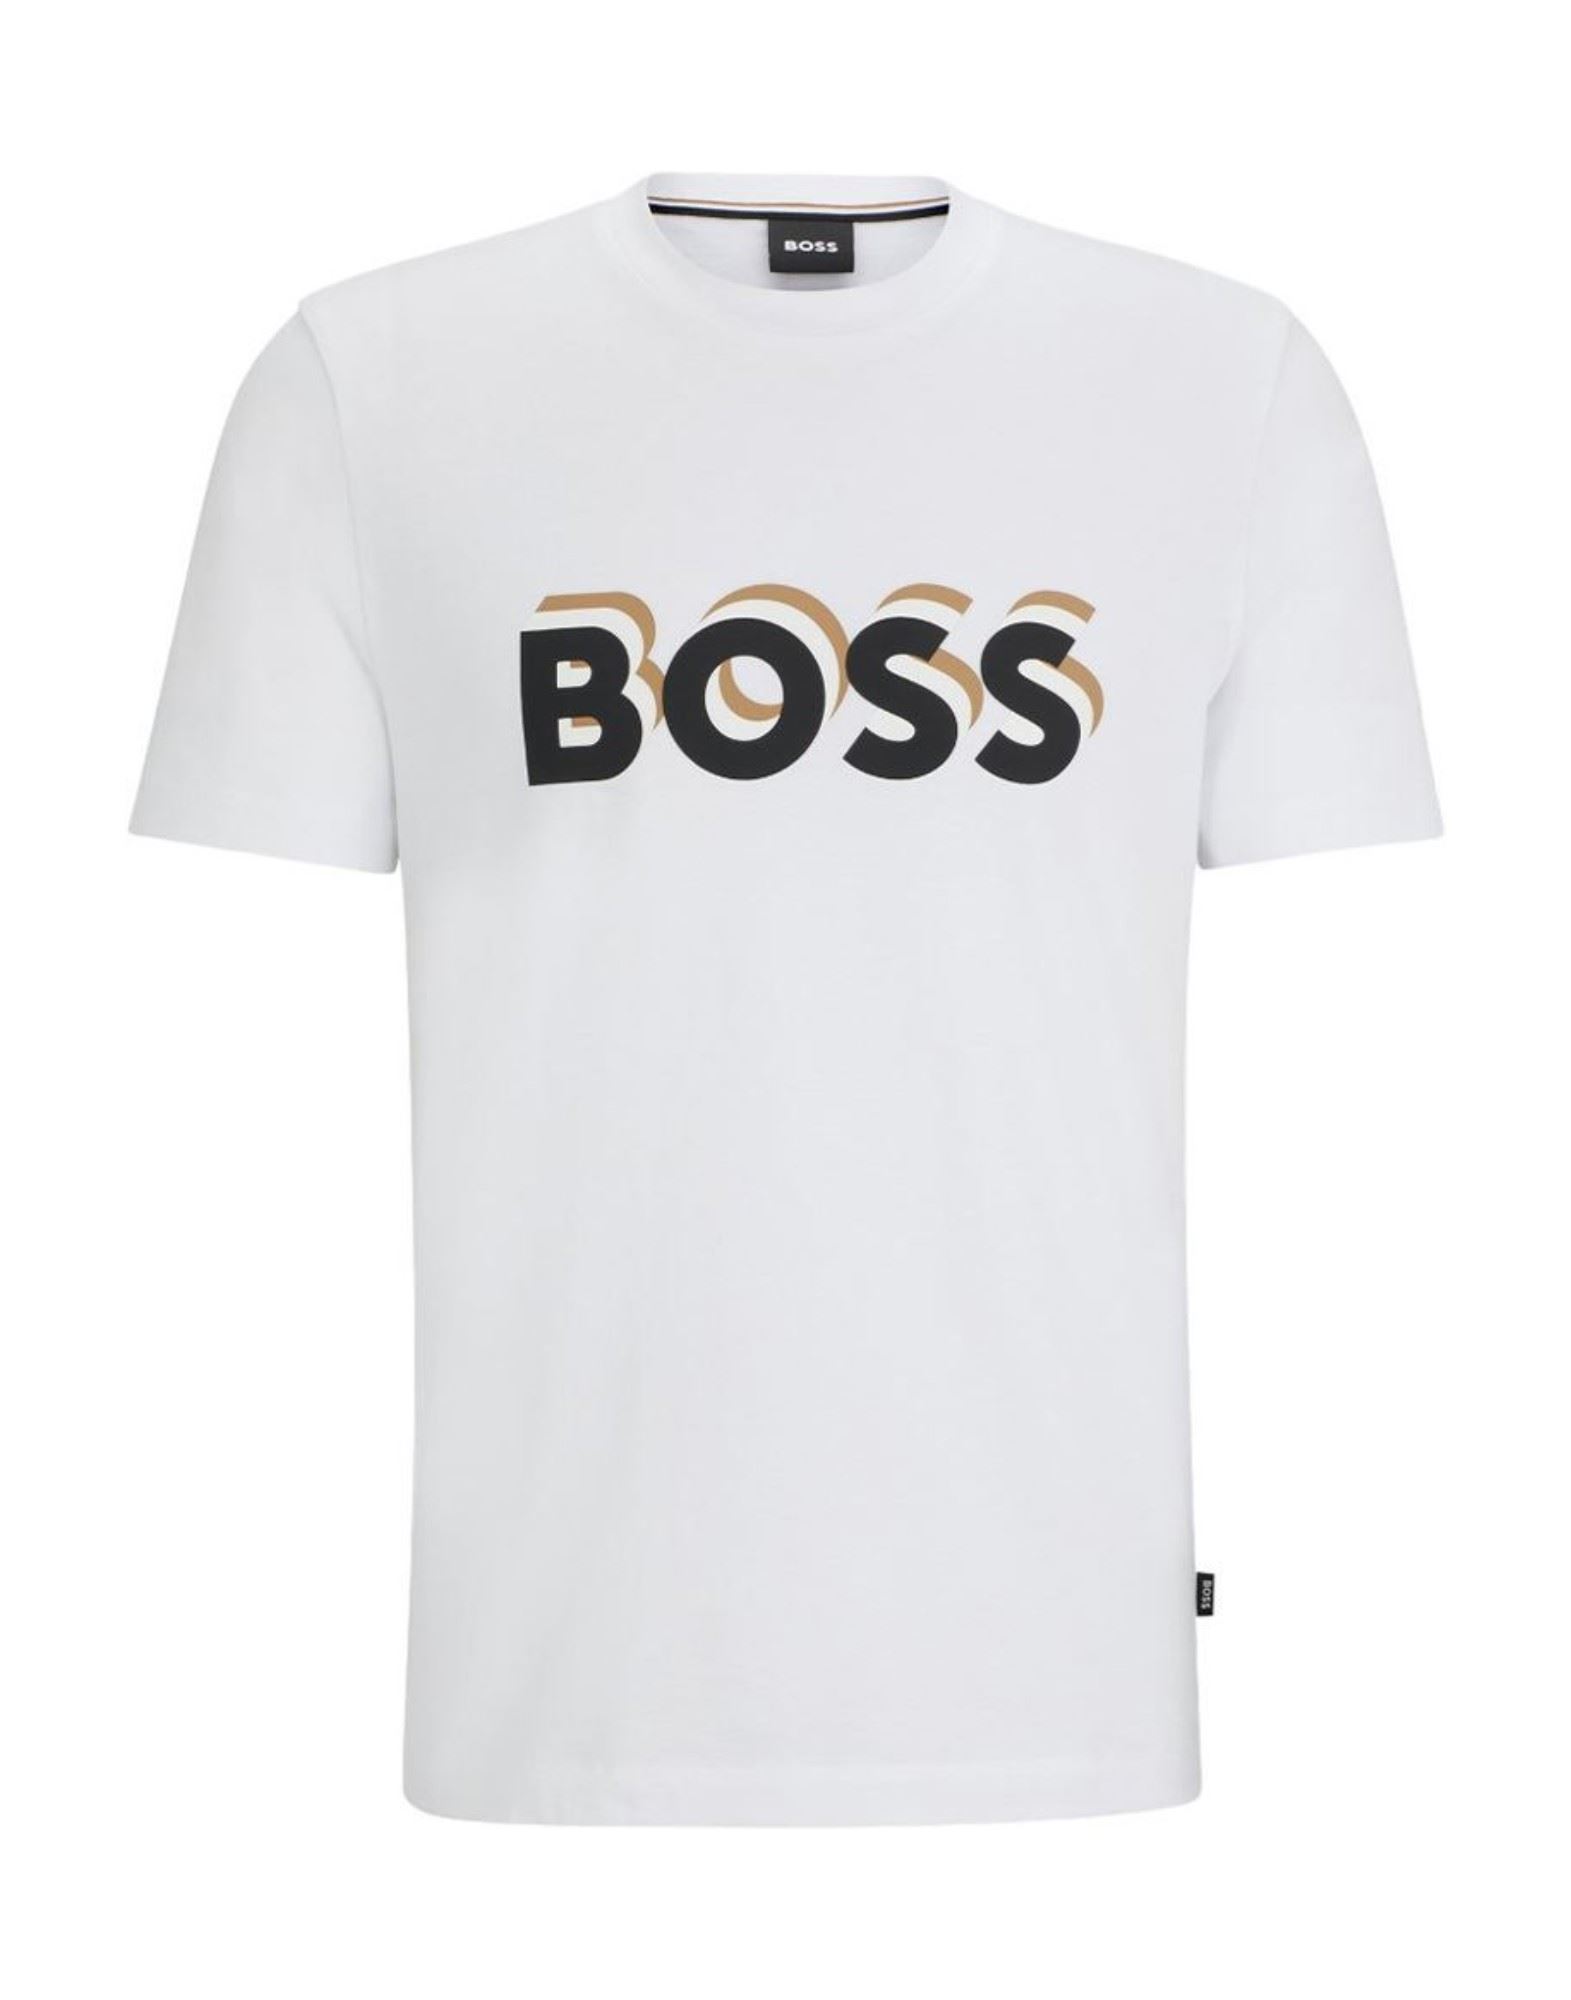 BOSS HUGO BOSS T-shirts Herren Weiß von BOSS HUGO BOSS